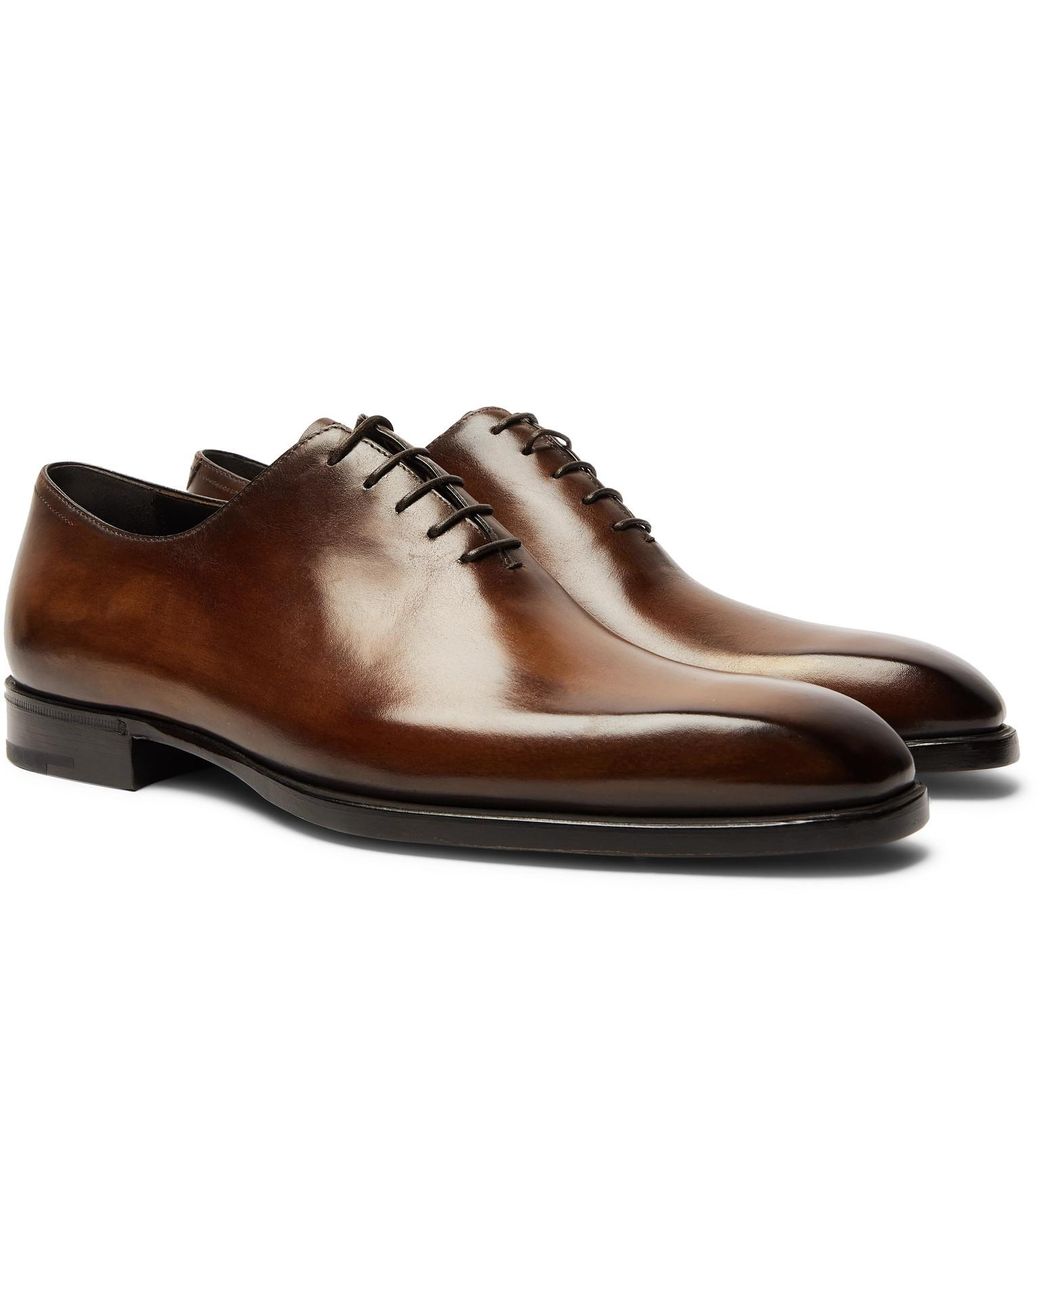 Berluti Alessandro Capri Leather Whole-cut Oxford Shoes in Brown 